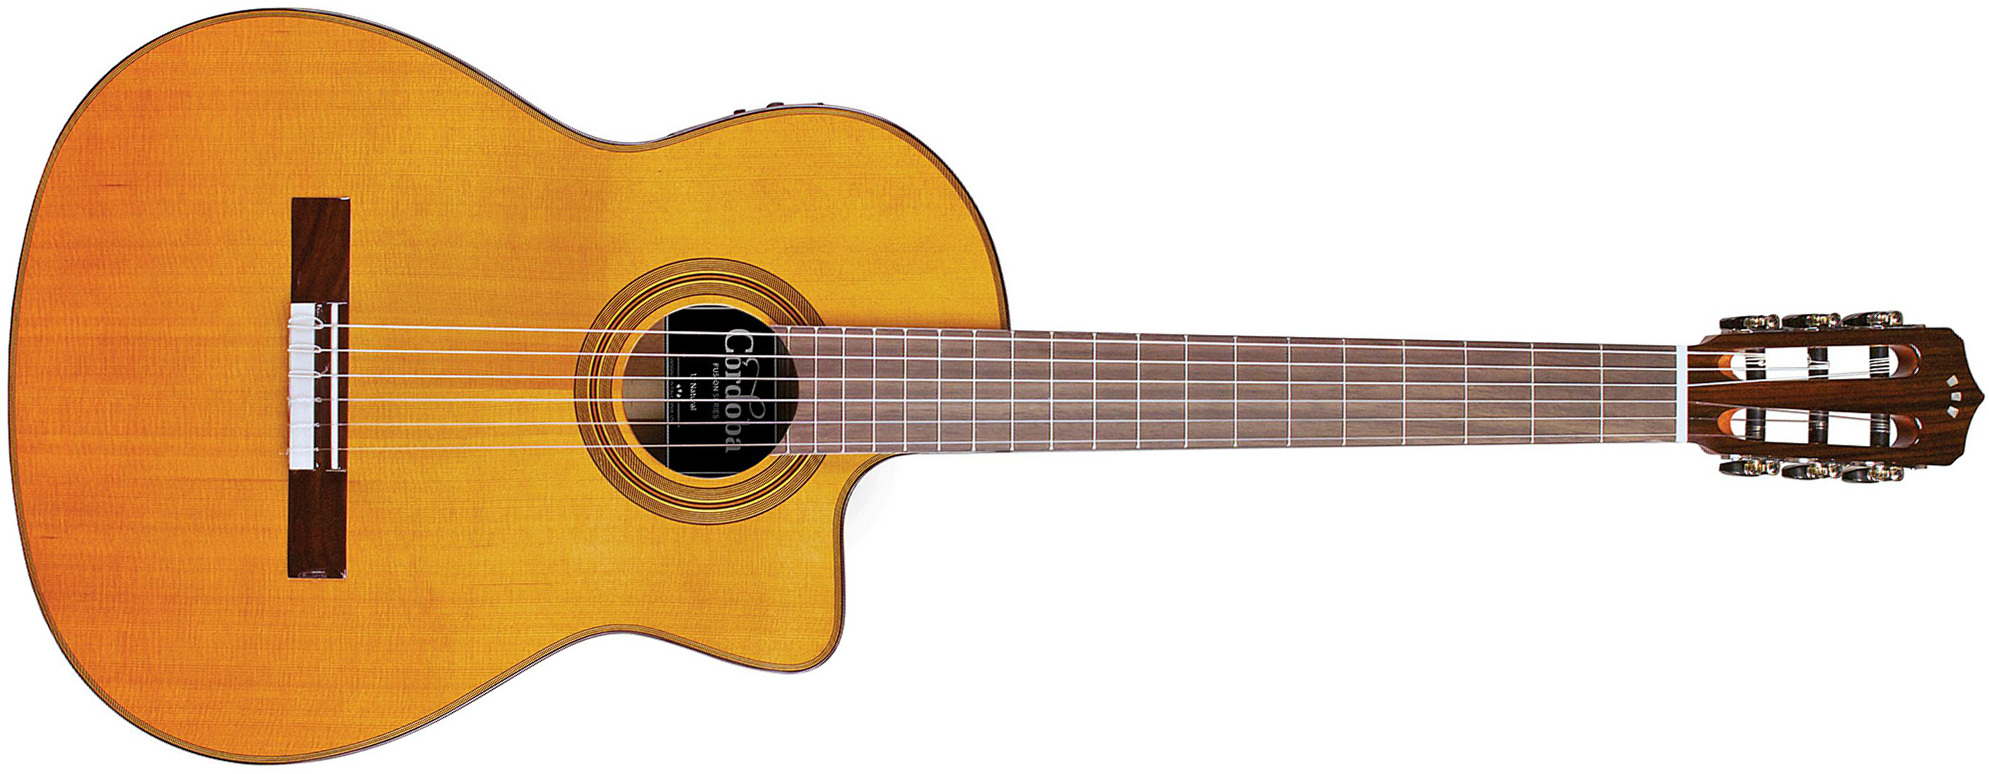 Cordoba Fusion 12 Natural Cedar Cw Fishman Presys - Natural - Classical guitar 4/4 size - Main picture